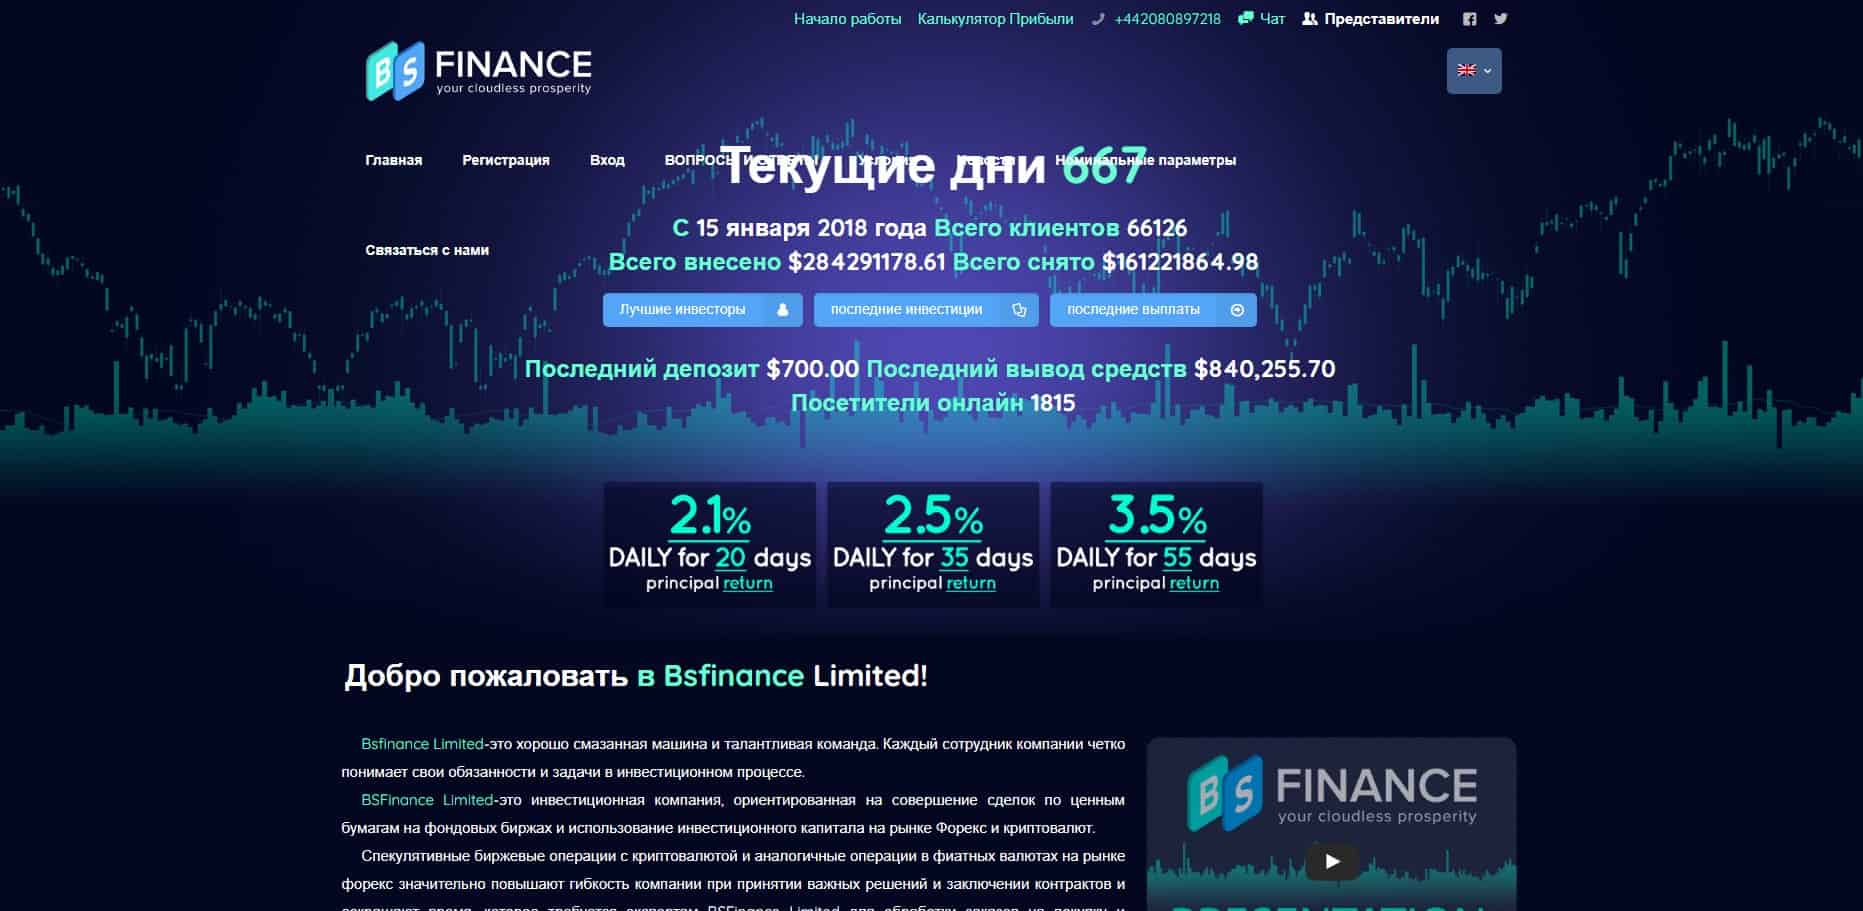 BSFinance Limited